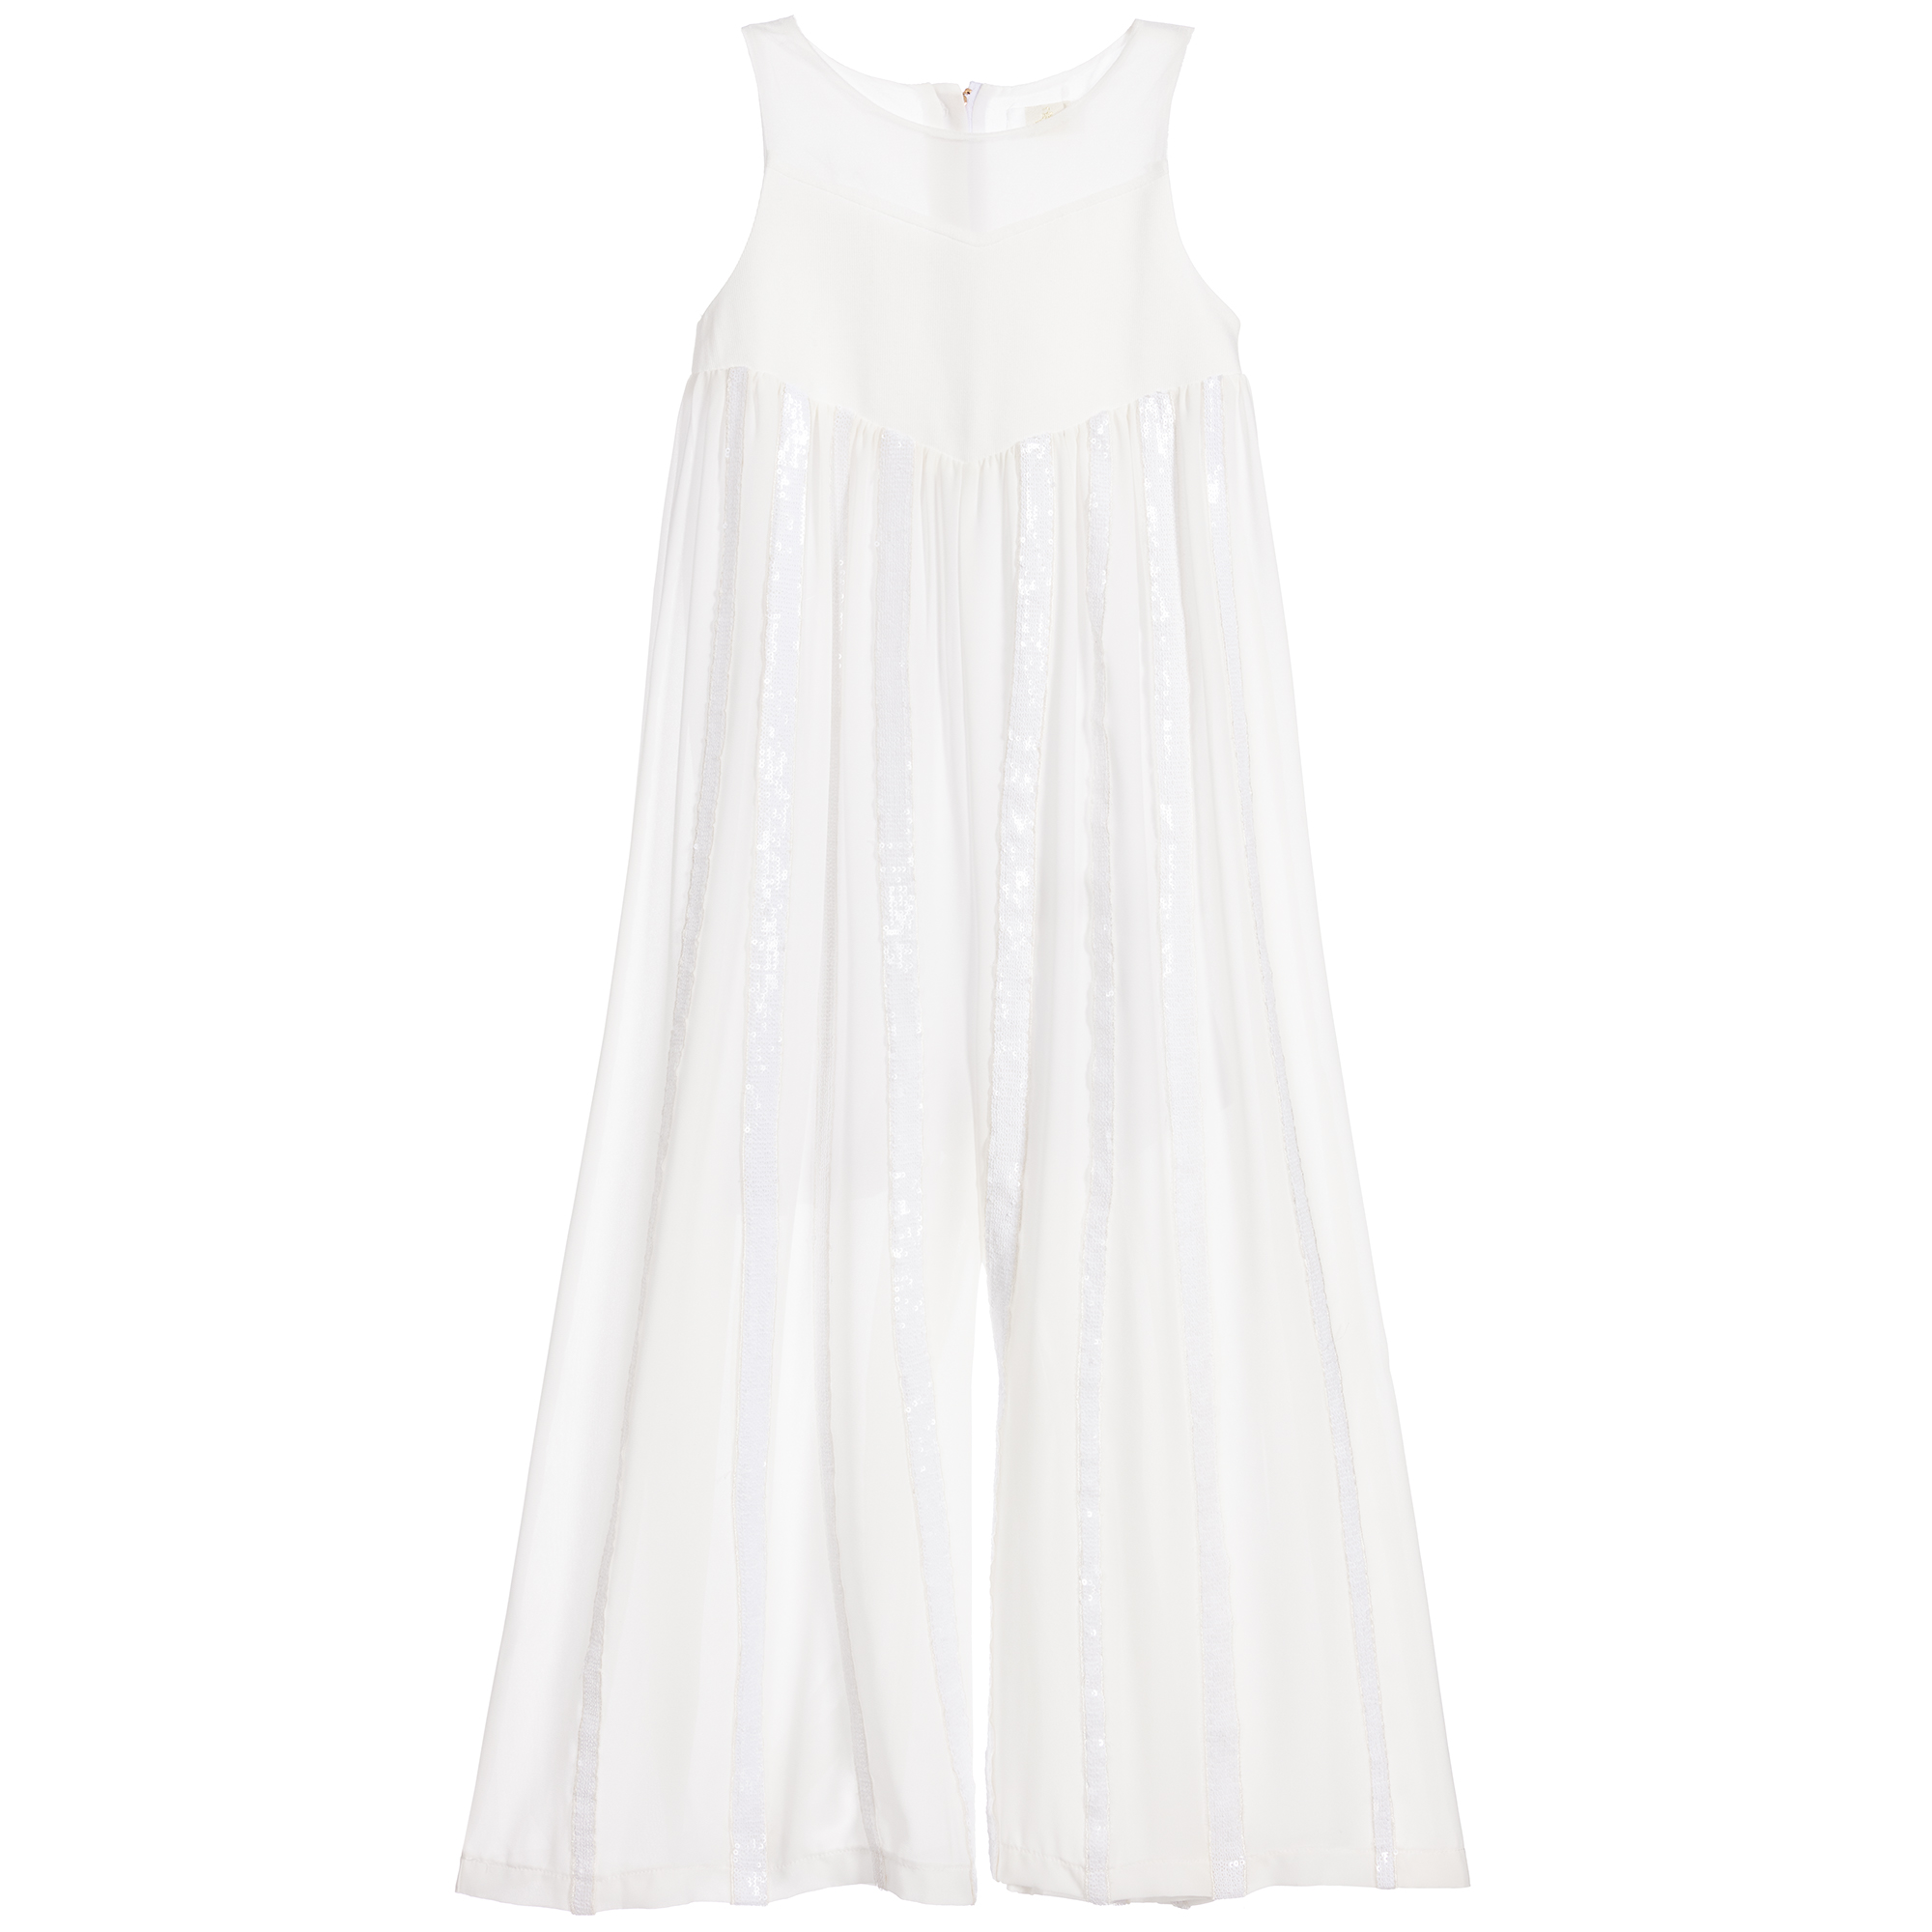 Buy White Lycra Jumpsuit for Girls Online